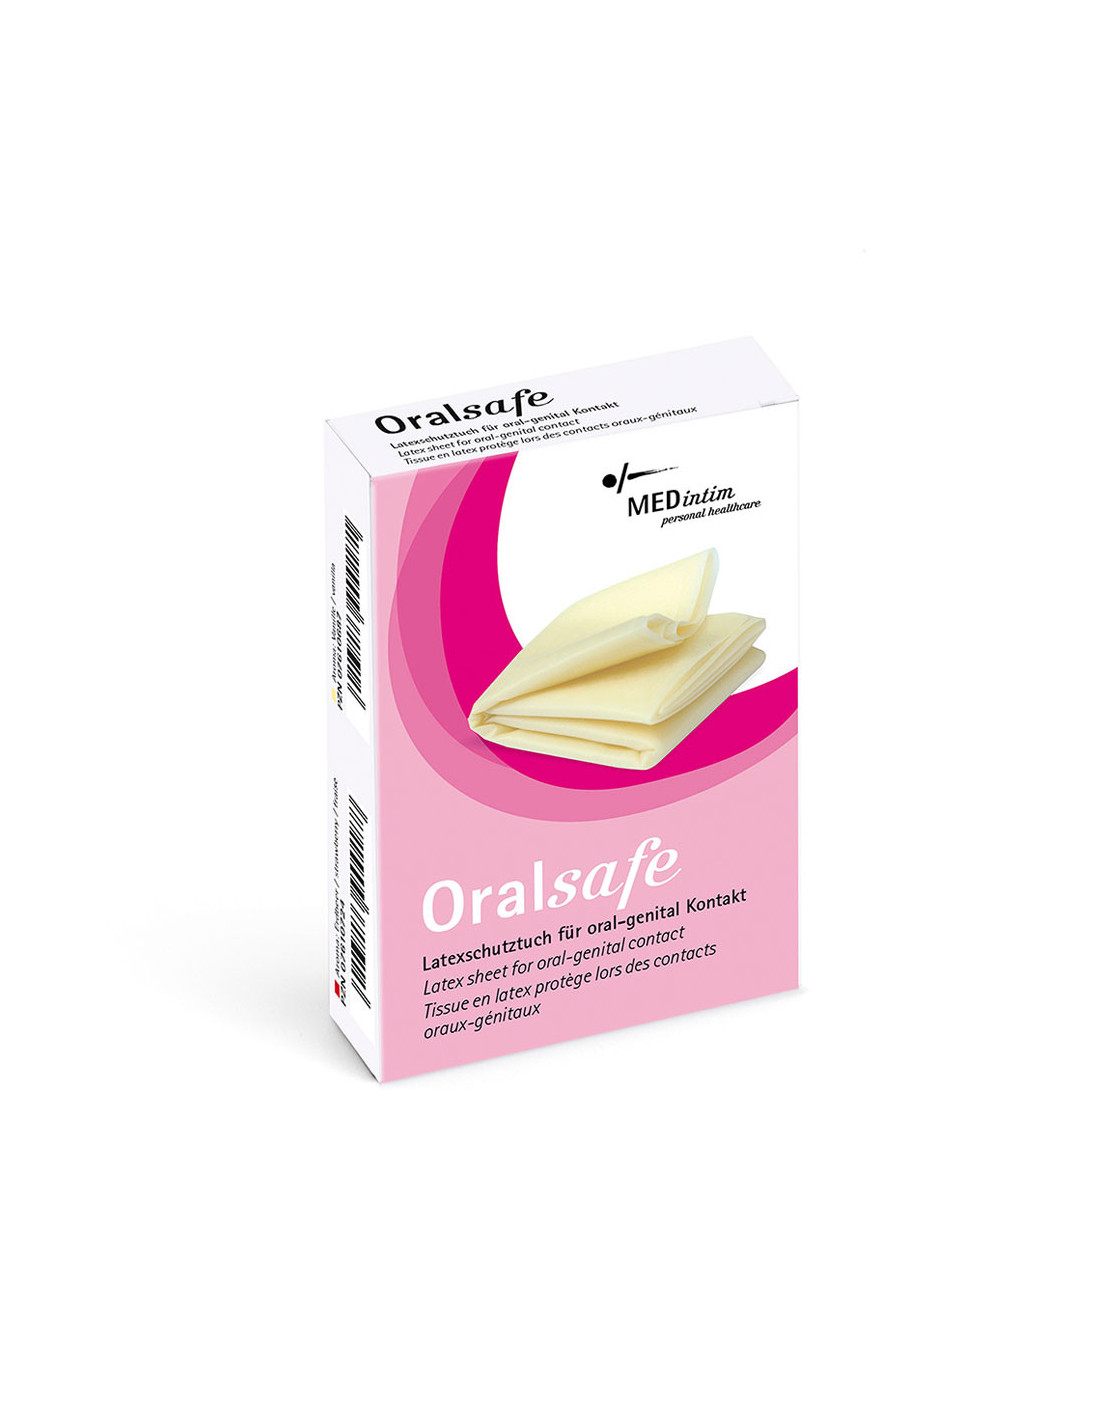 MEDintim OralSafe Vanille: digue dentaire de qualité